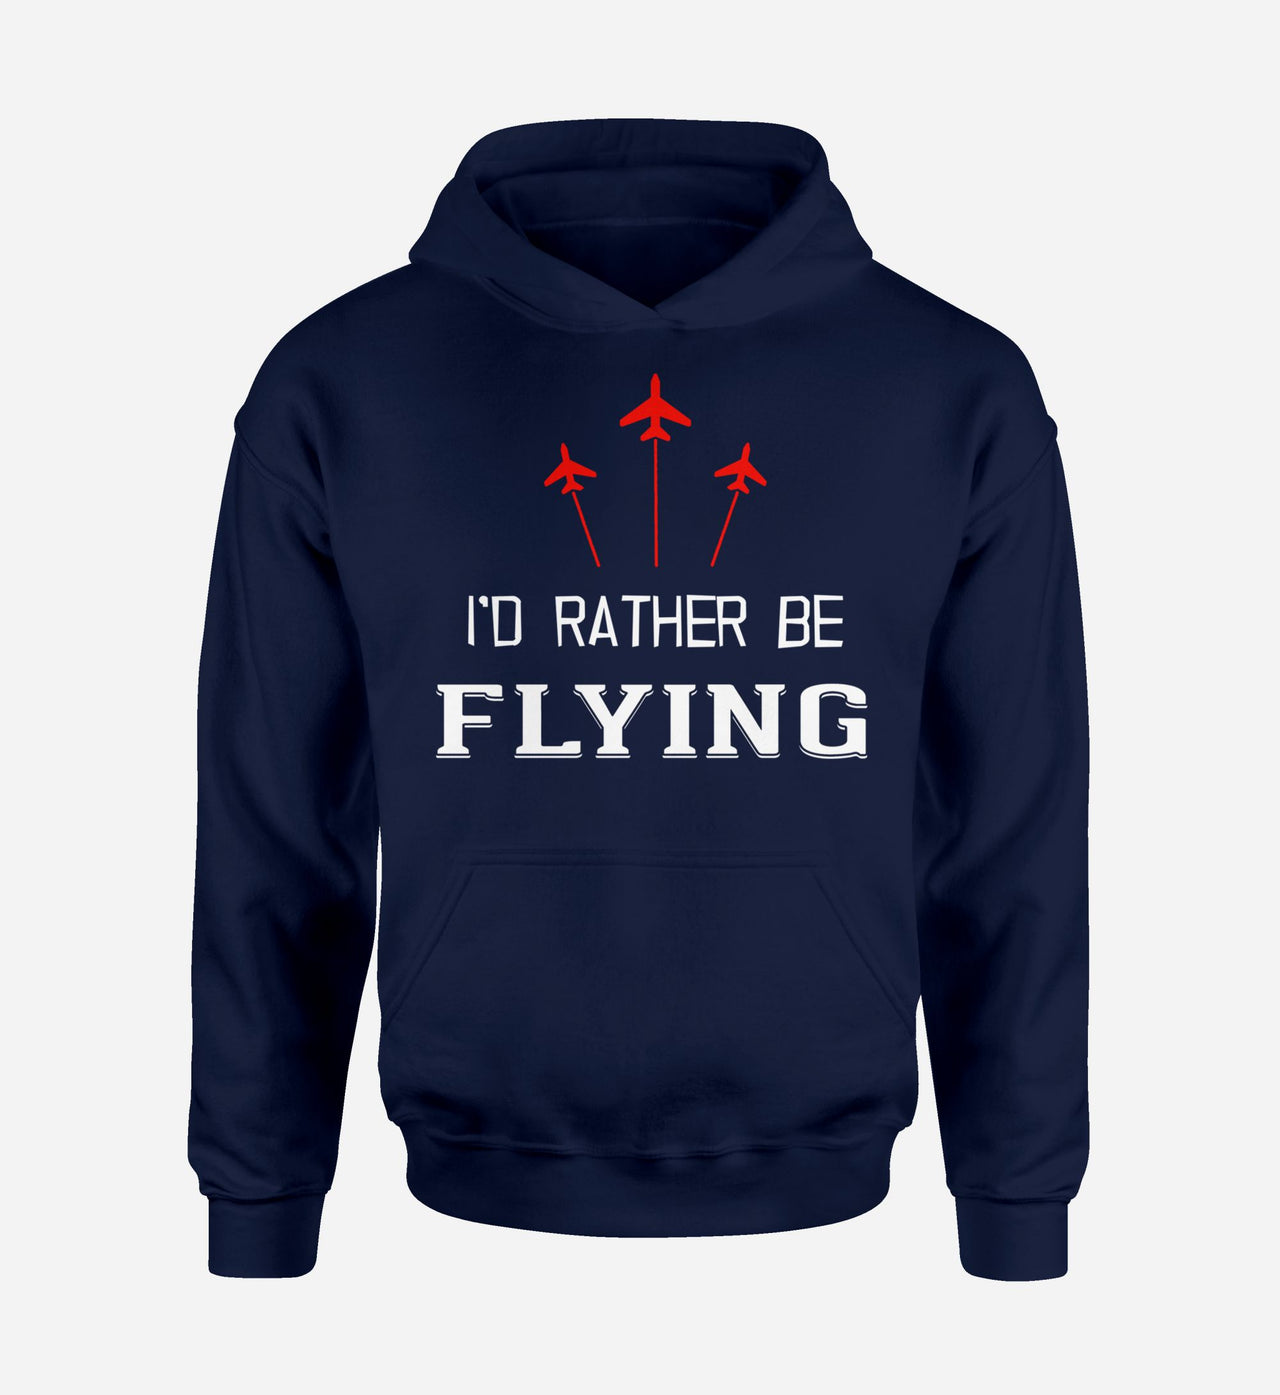 I'D Rather Be Flying Designed Hoodies